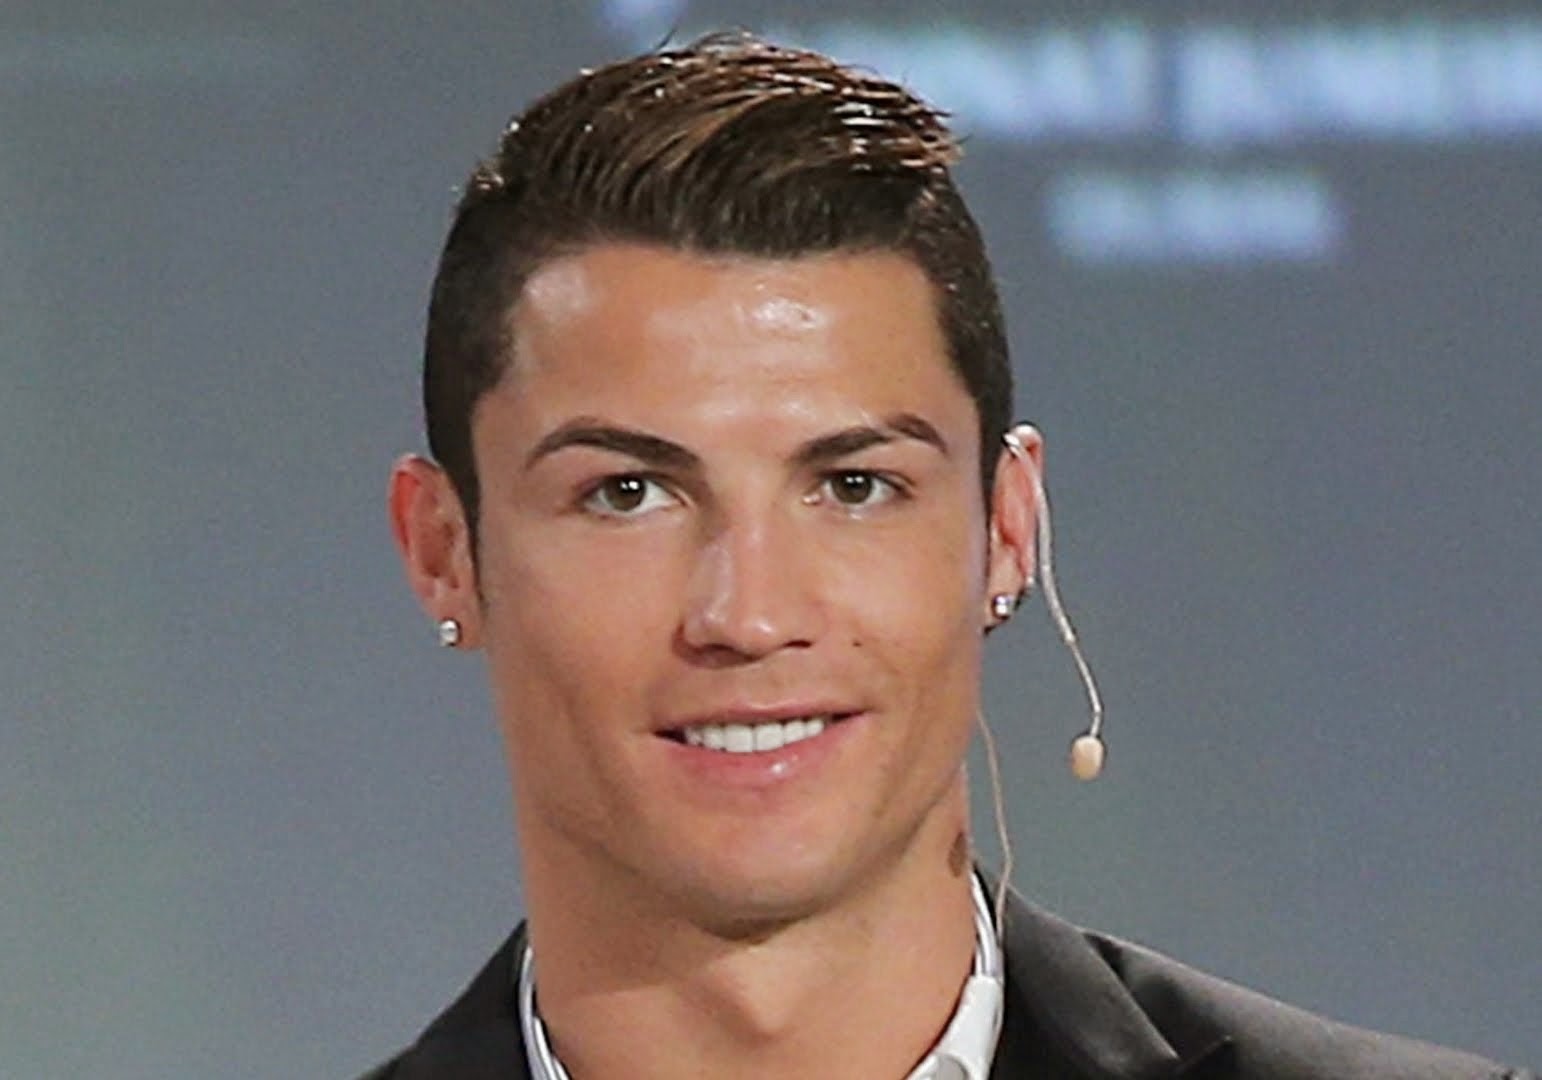 Gaya Rambut Ronaldo Terbaru 2015, Dari samping, Depan dan Belakang jpg (1542x1080)